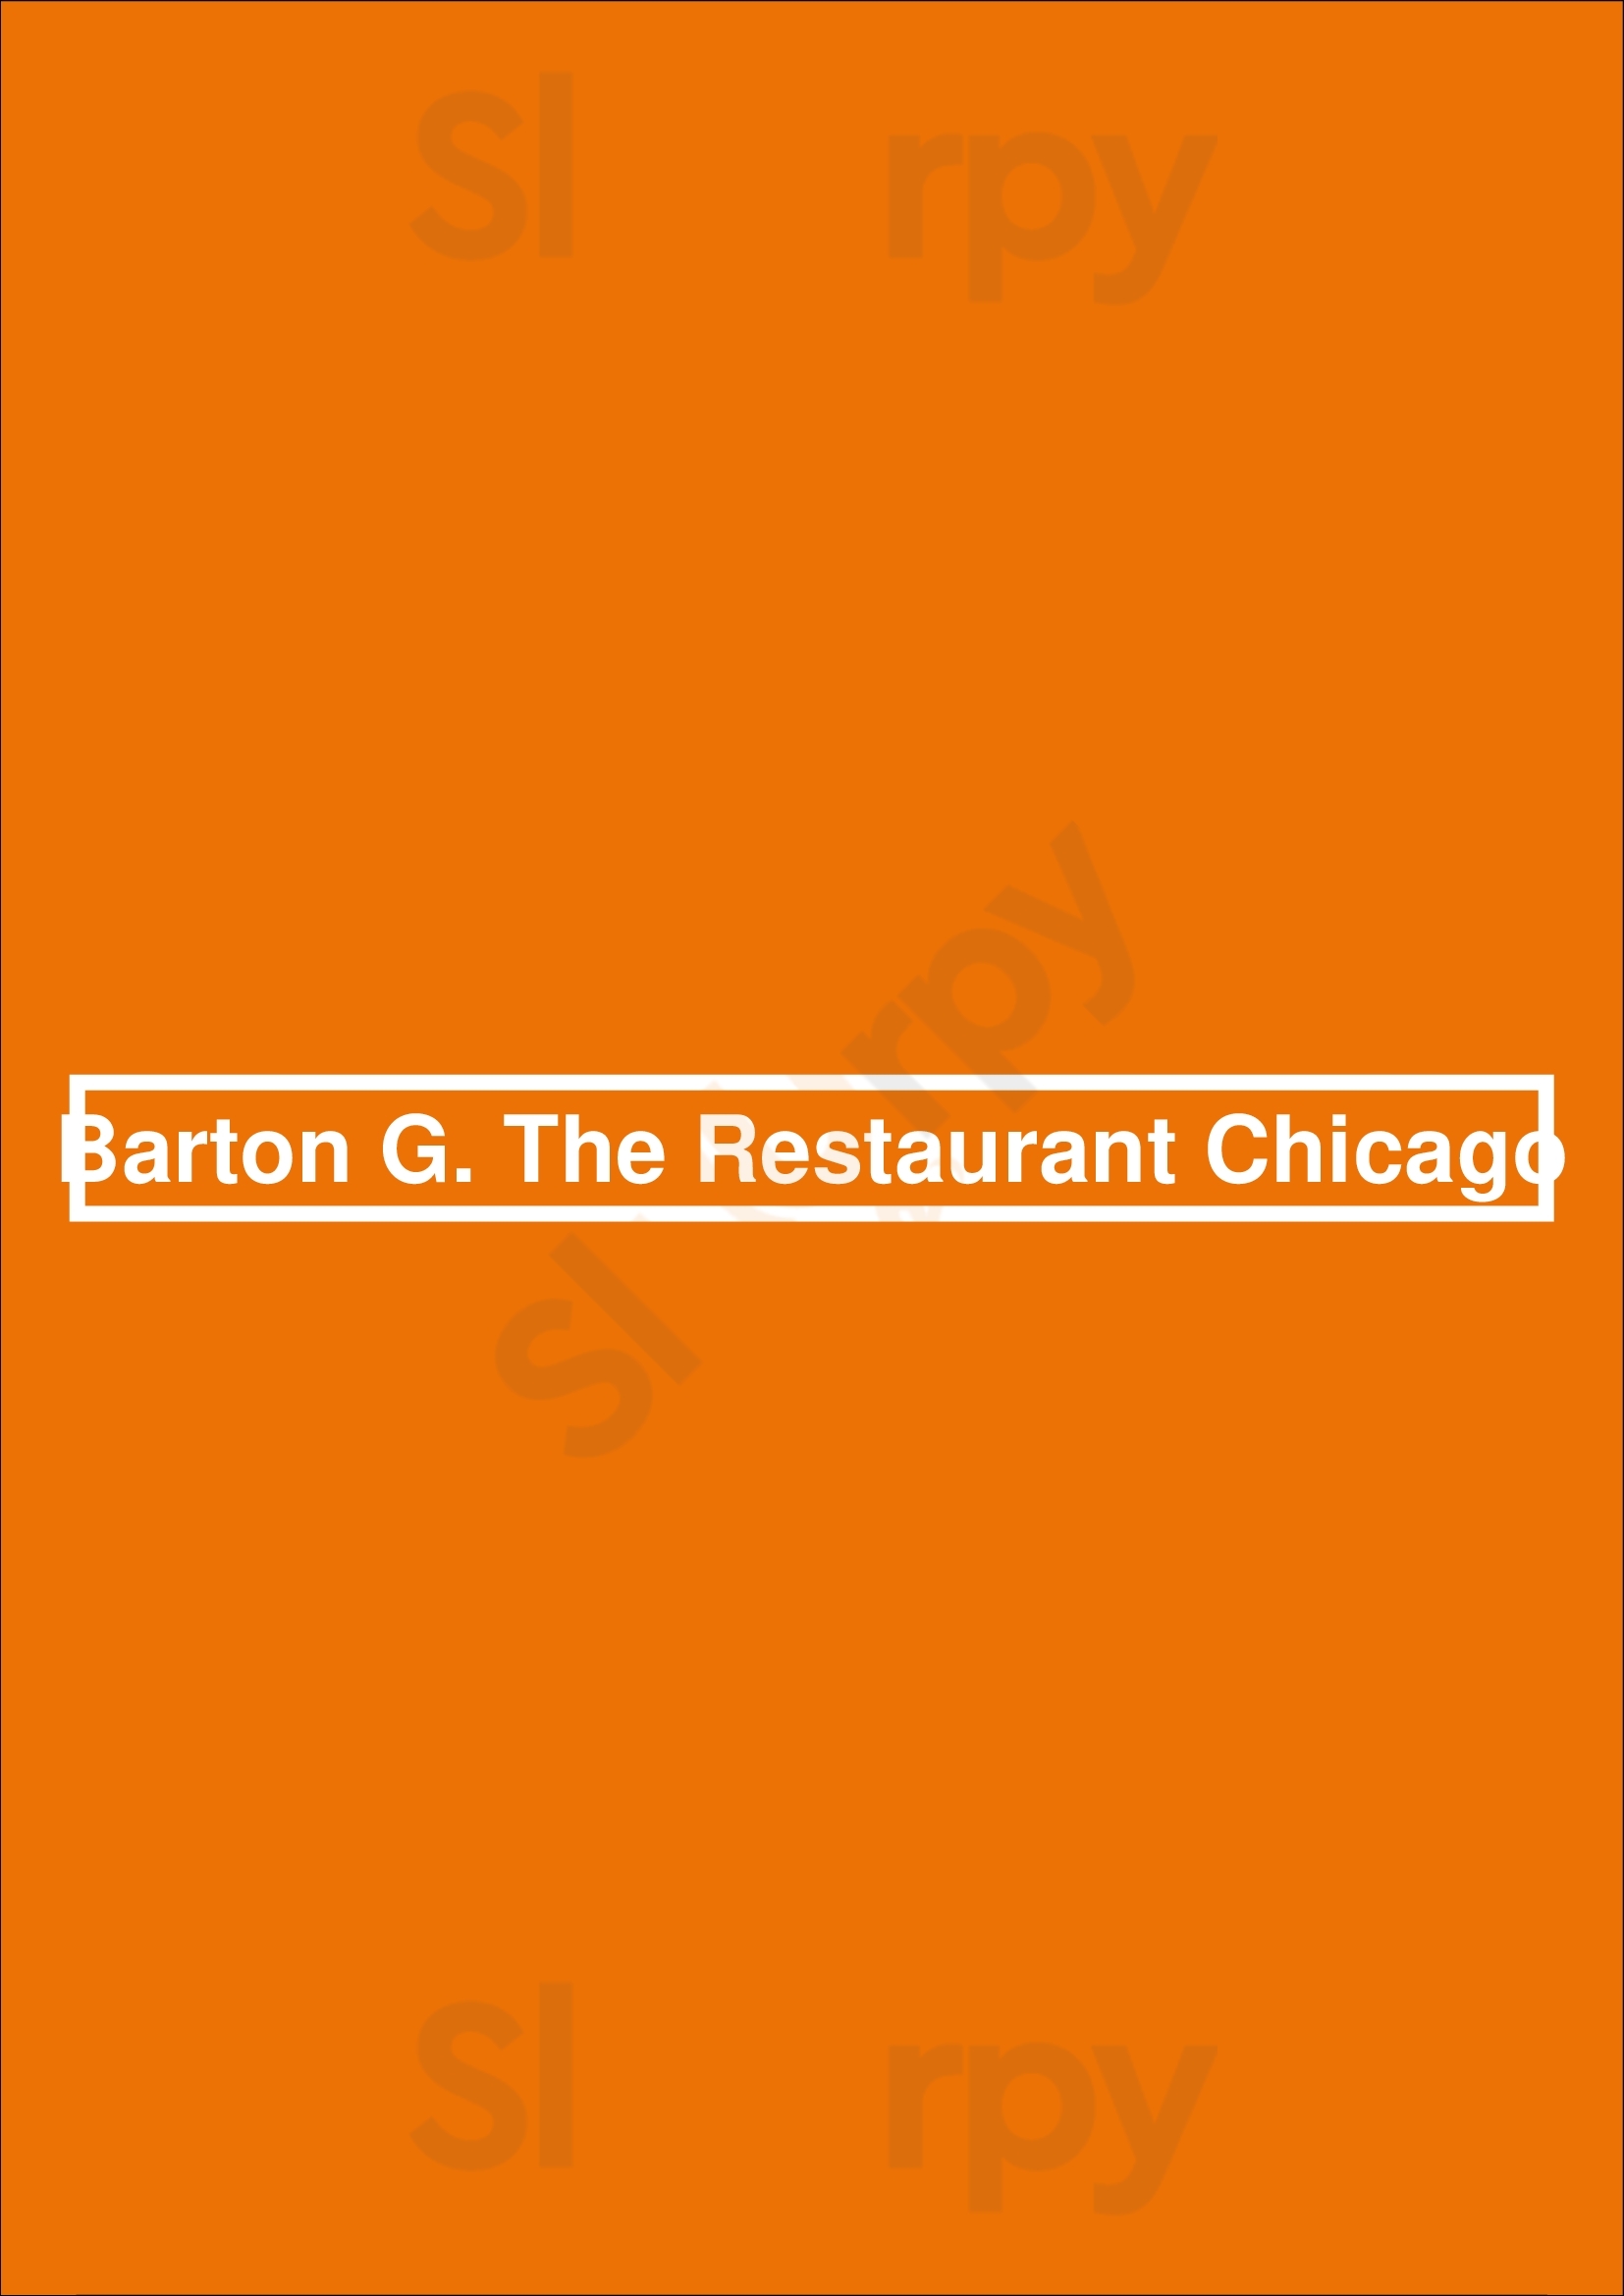 Barton G. The Restaurant Chicago Chicago Menu - 1